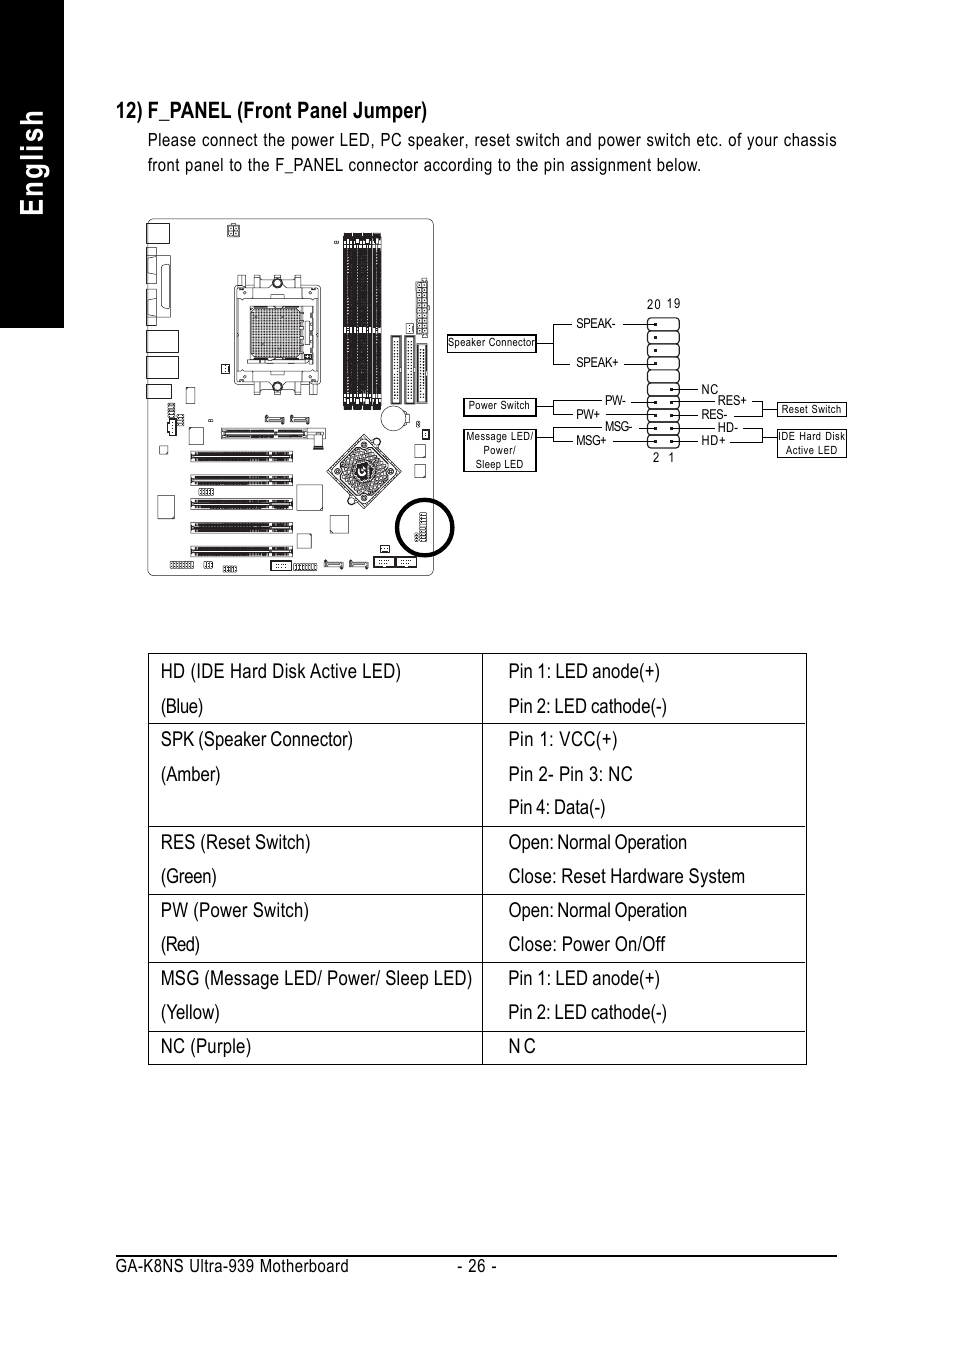 English, 12) f_panel (front panel jumper) | GIGABYTE GA-K8NS ULTRA-939 User  Manual | Page 26 / 96 | Original mode